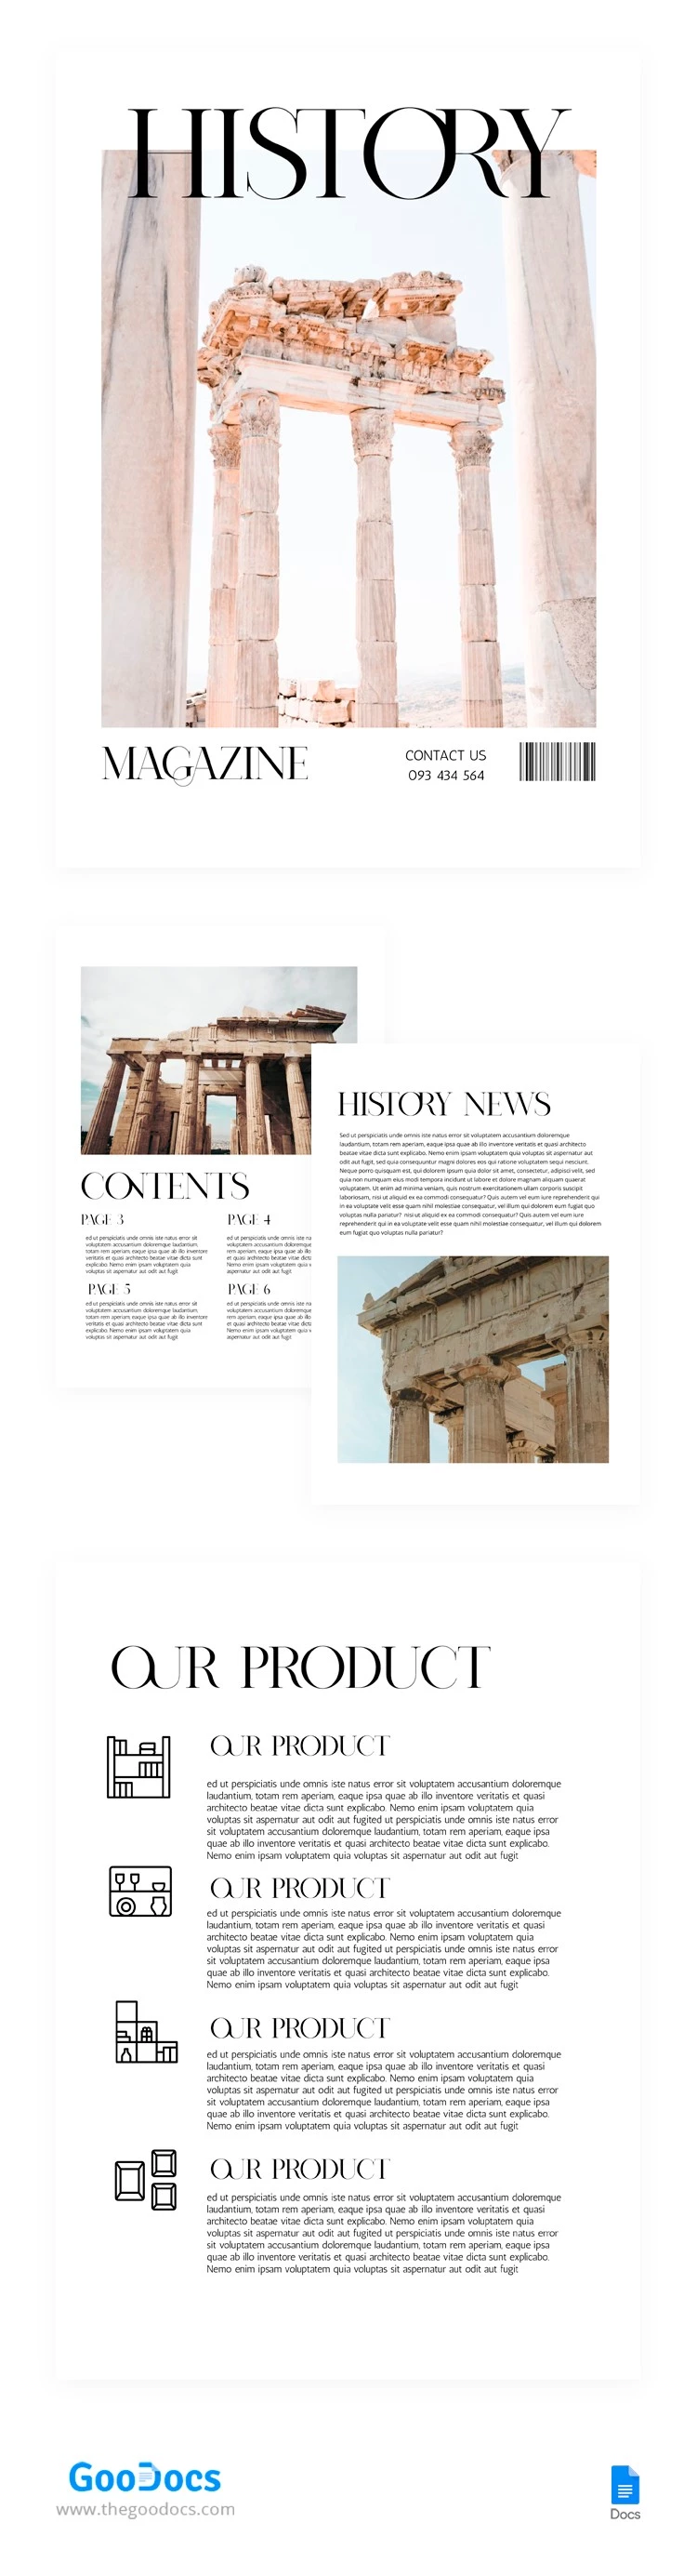 Minimal History Magazine - free Google Docs Template - 10066012